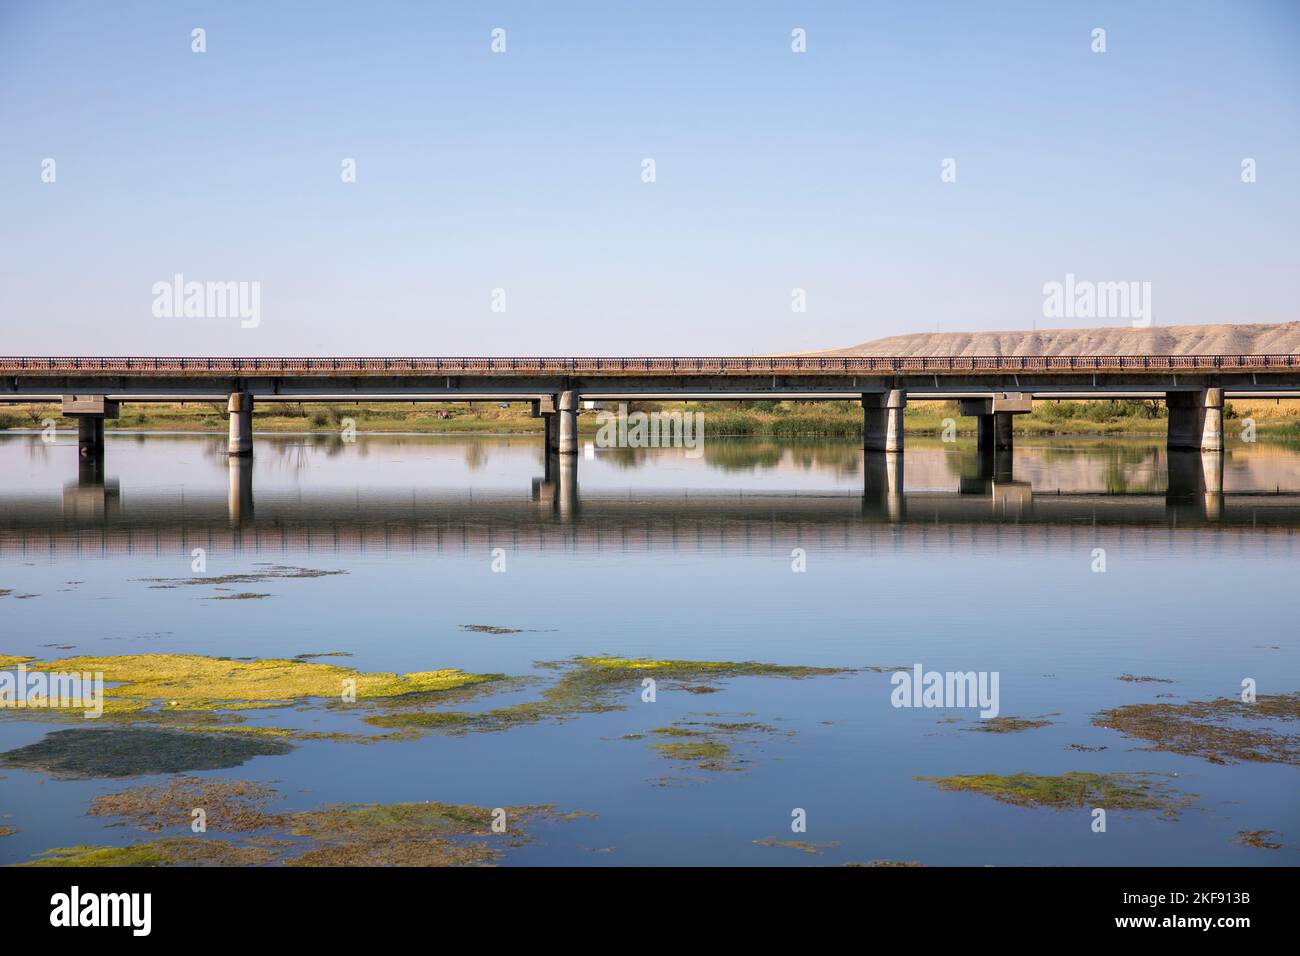 bridge over the river, Transport concept Stock Photo